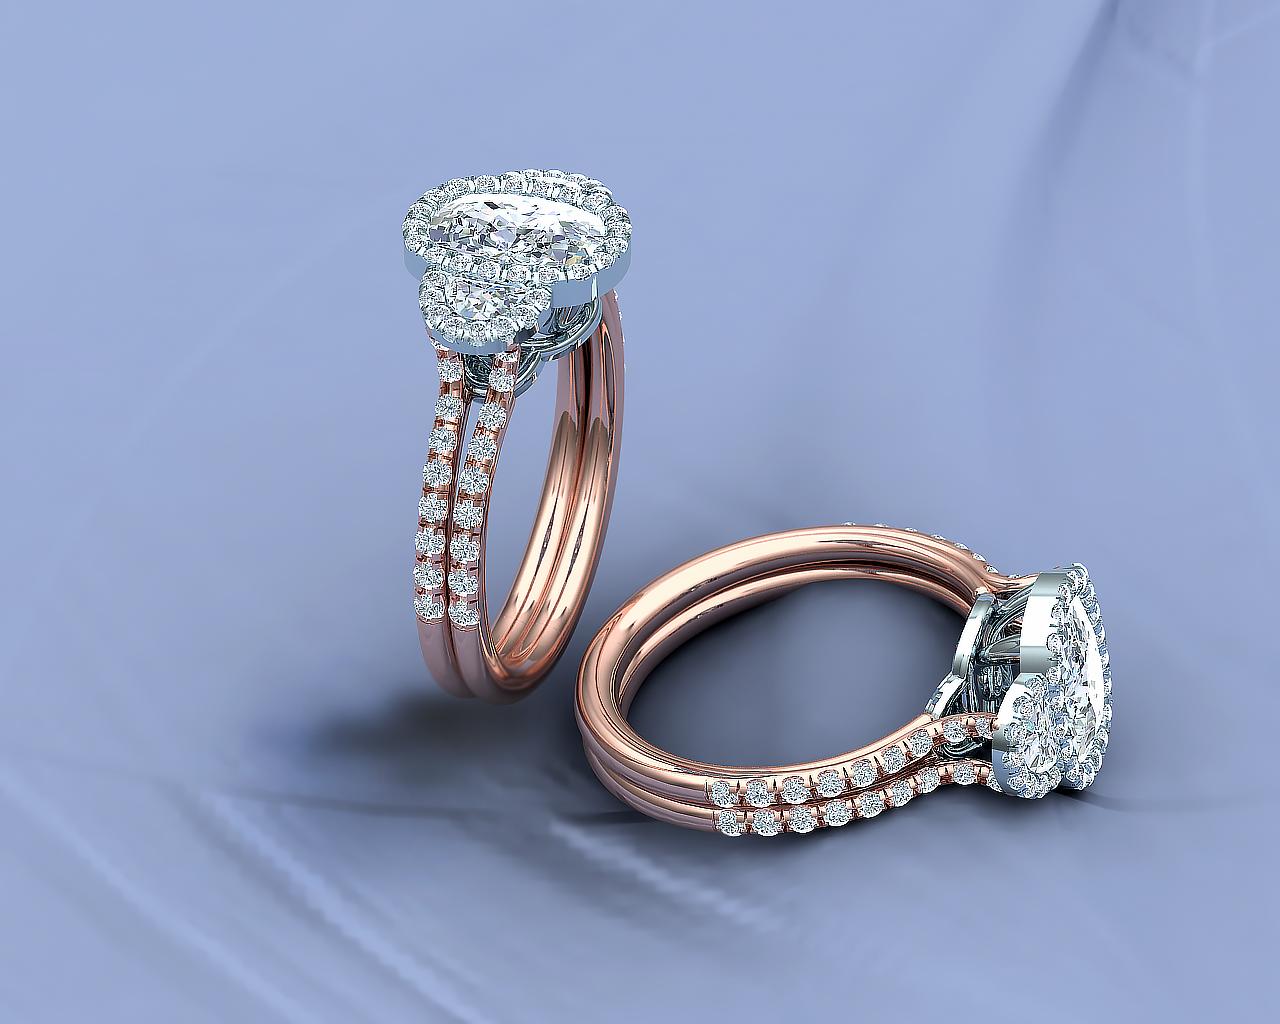 2 carat center stone engagement ring